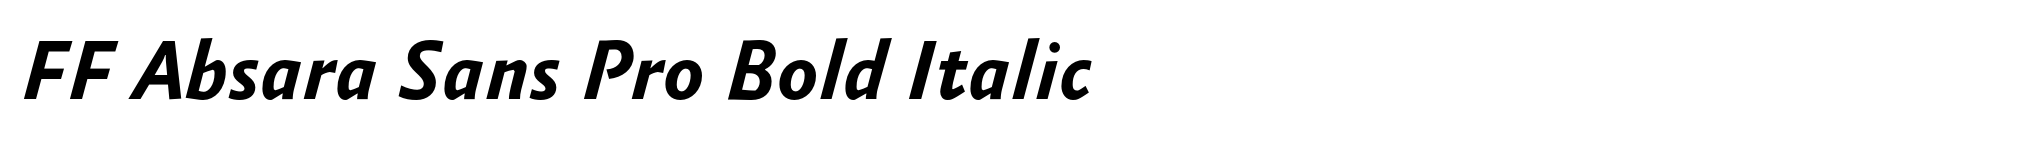 FF Absara Sans Pro Bold Italic image